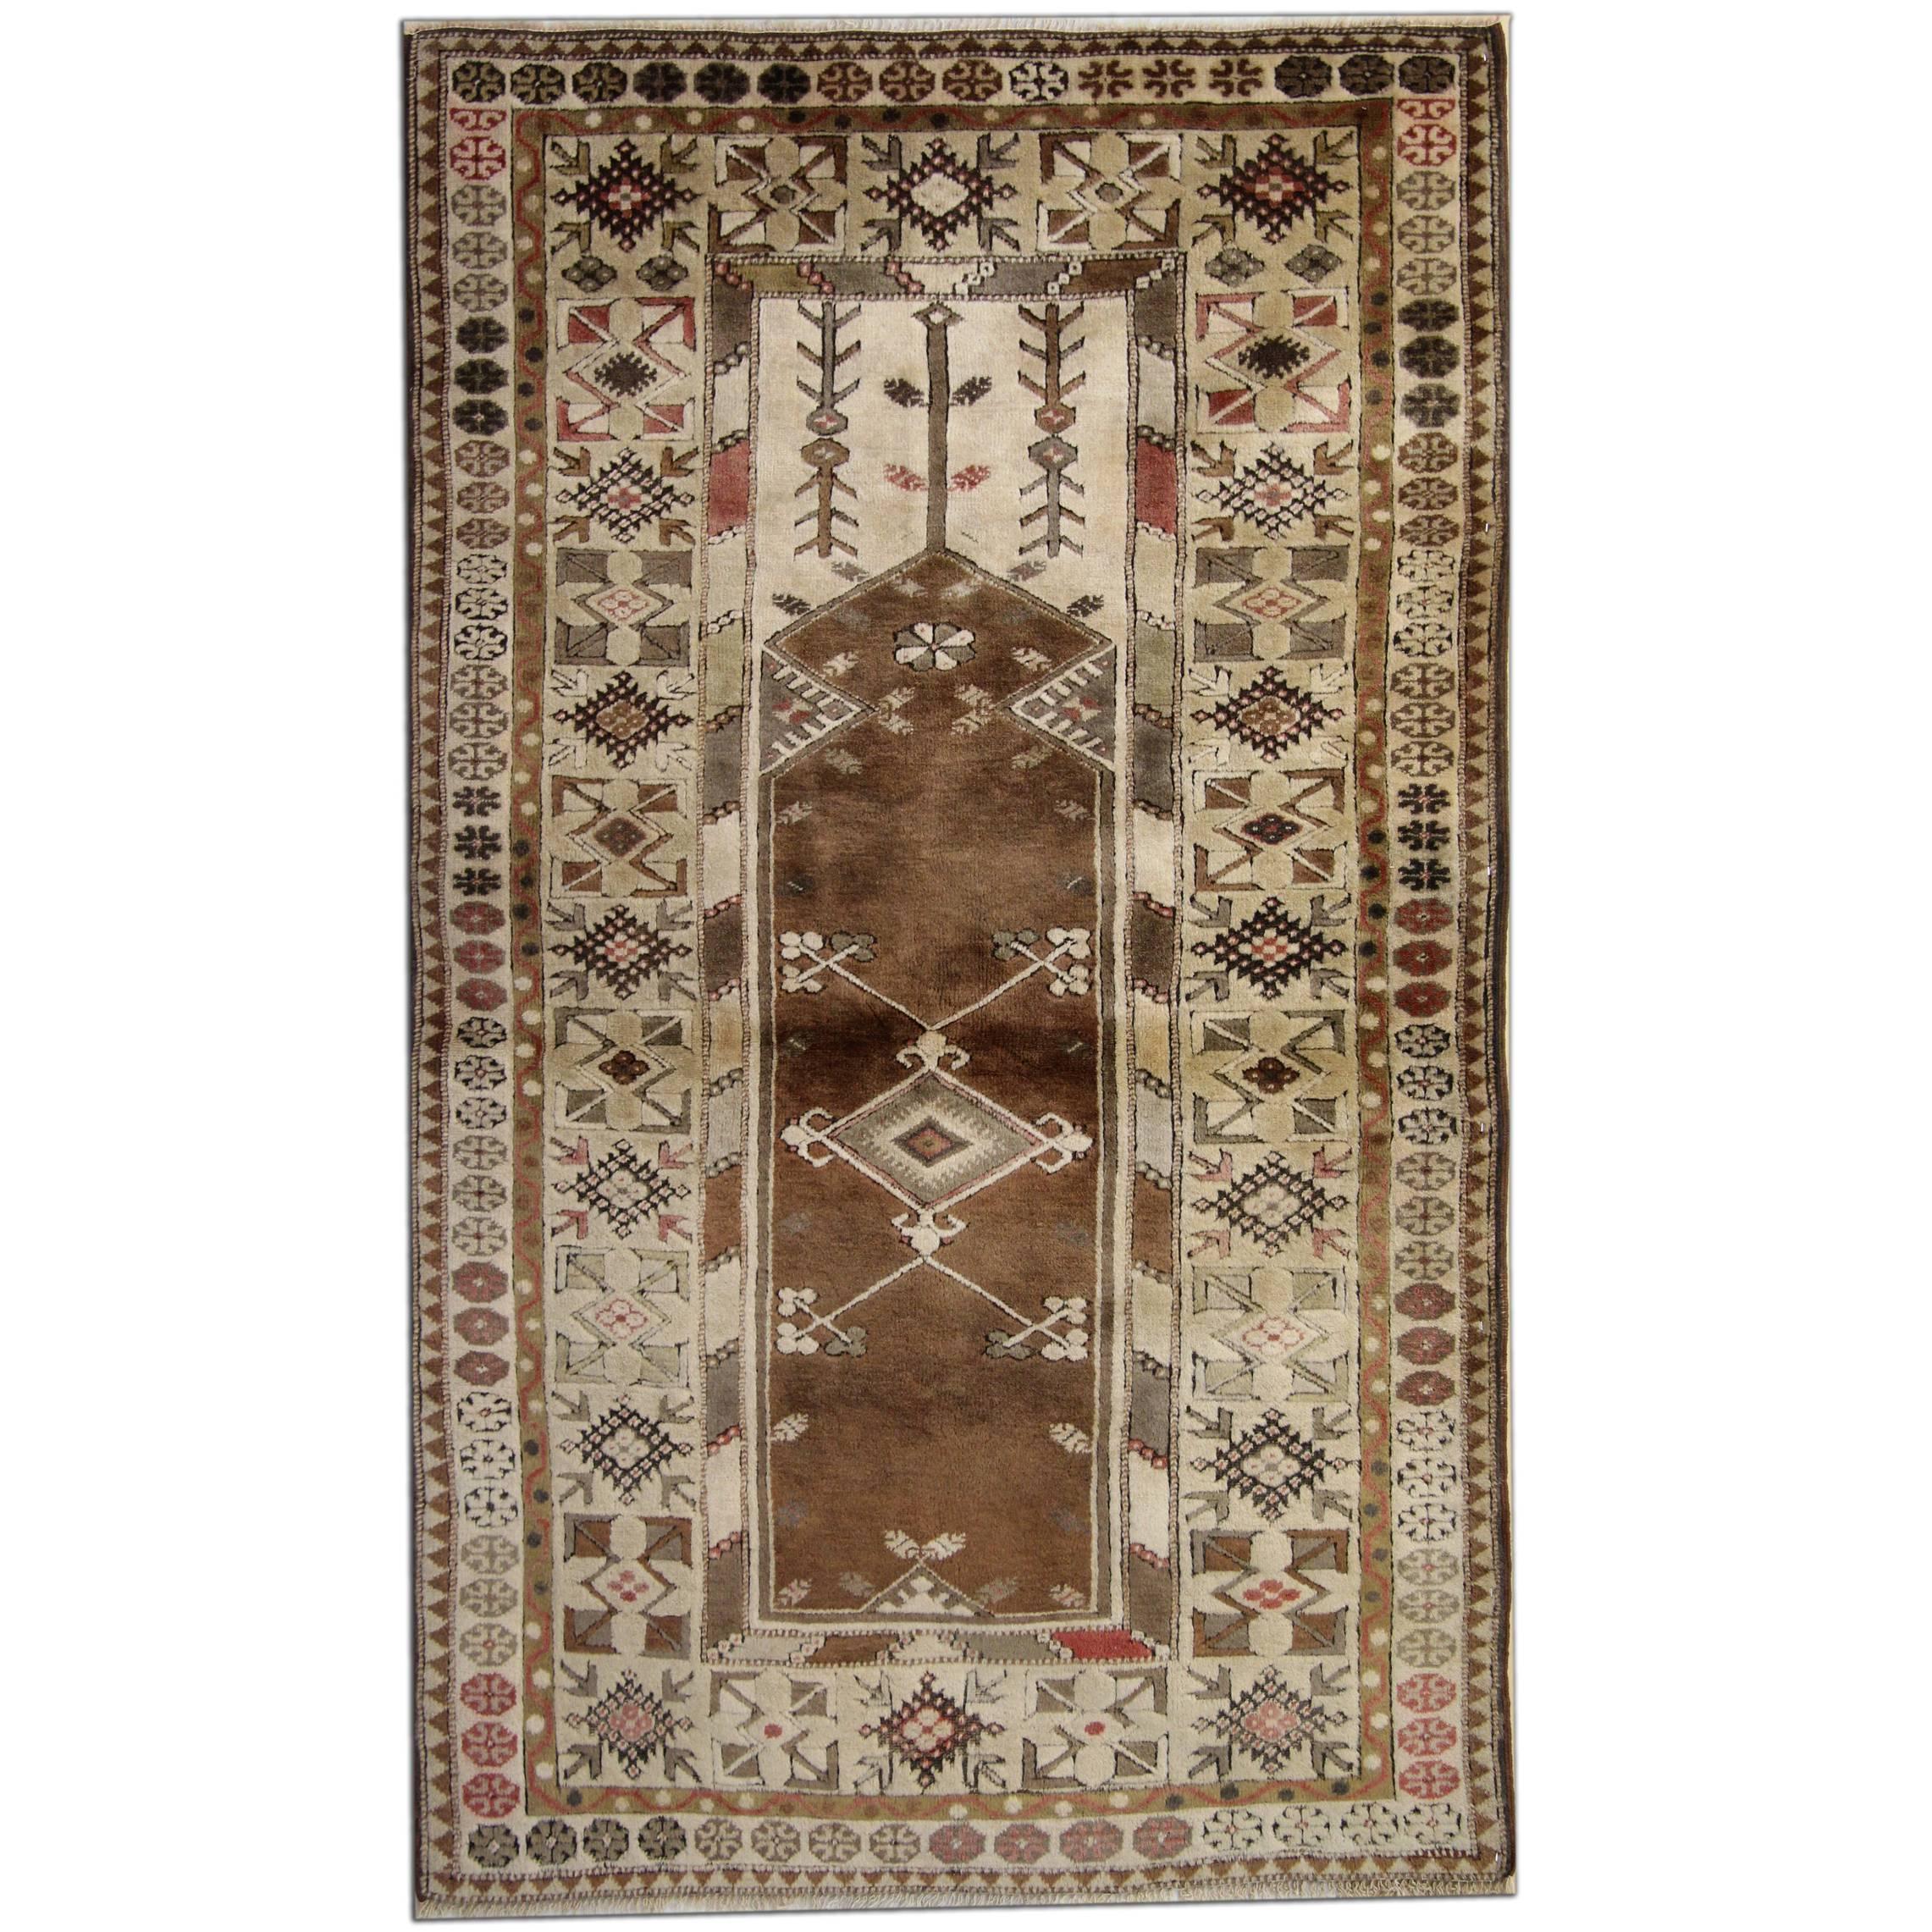 Antique Turkish Rugs, Vintage Rug Milas, Brown Rug, Hand Made Carpet 